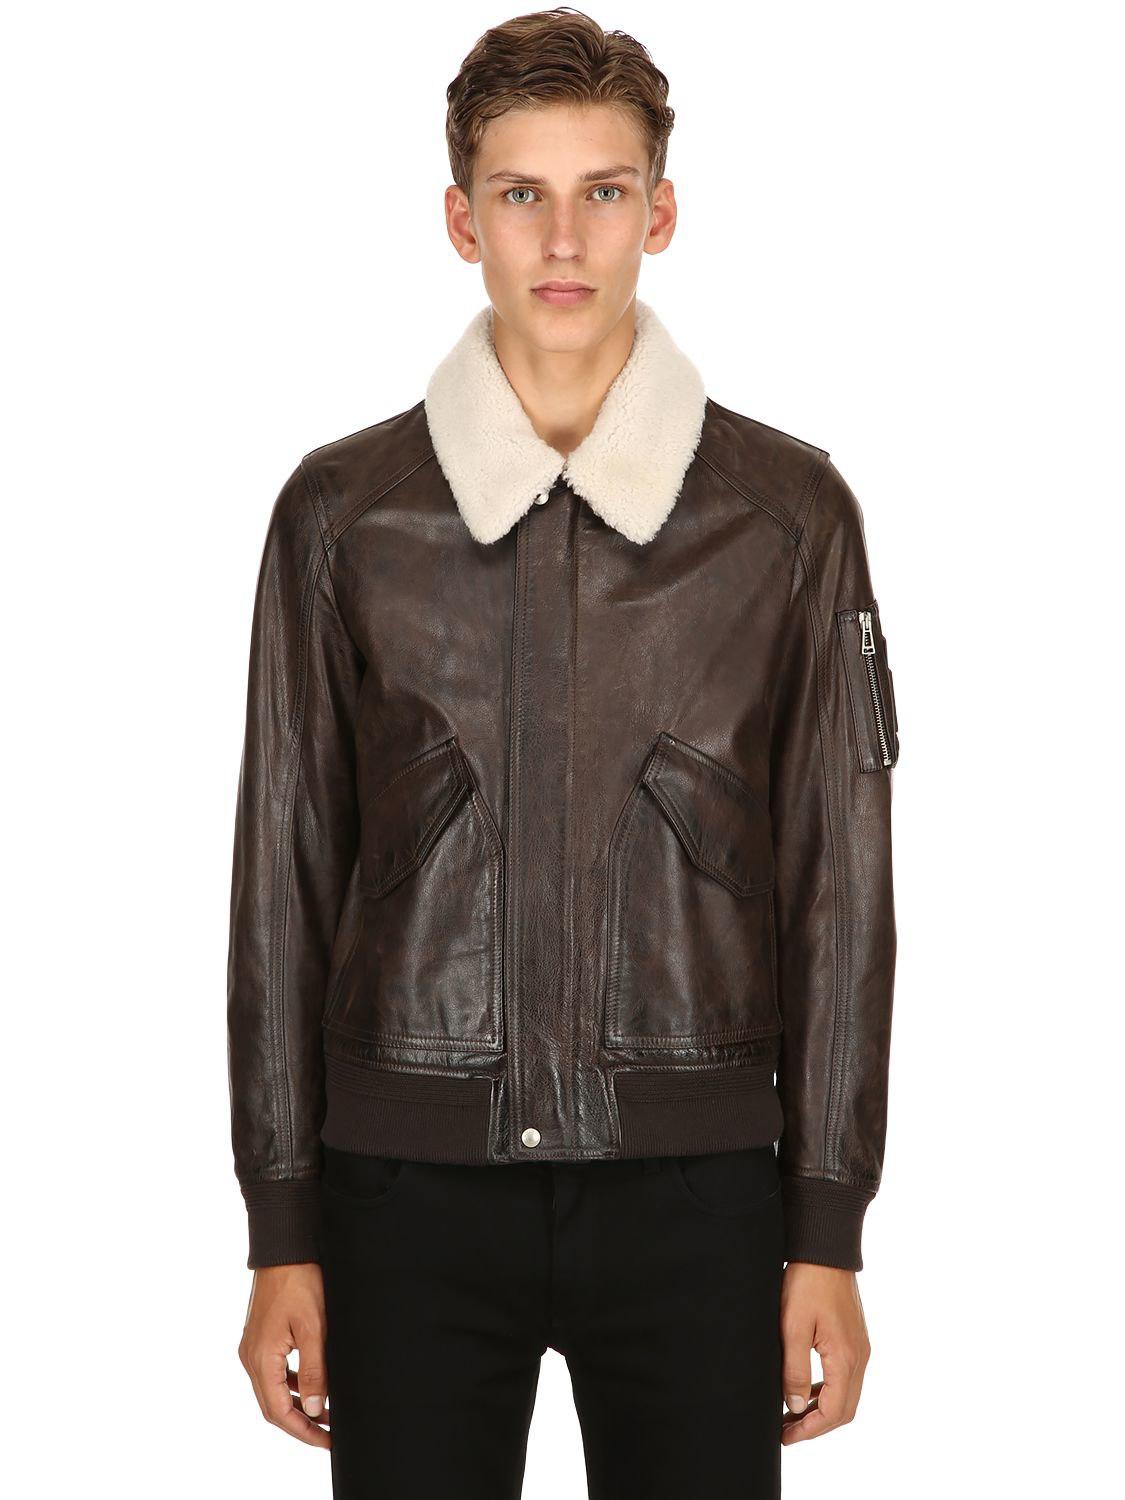 Belstaff Arne Leather Aviator Jacket in Dark Brown (Brown) for Men - Lyst